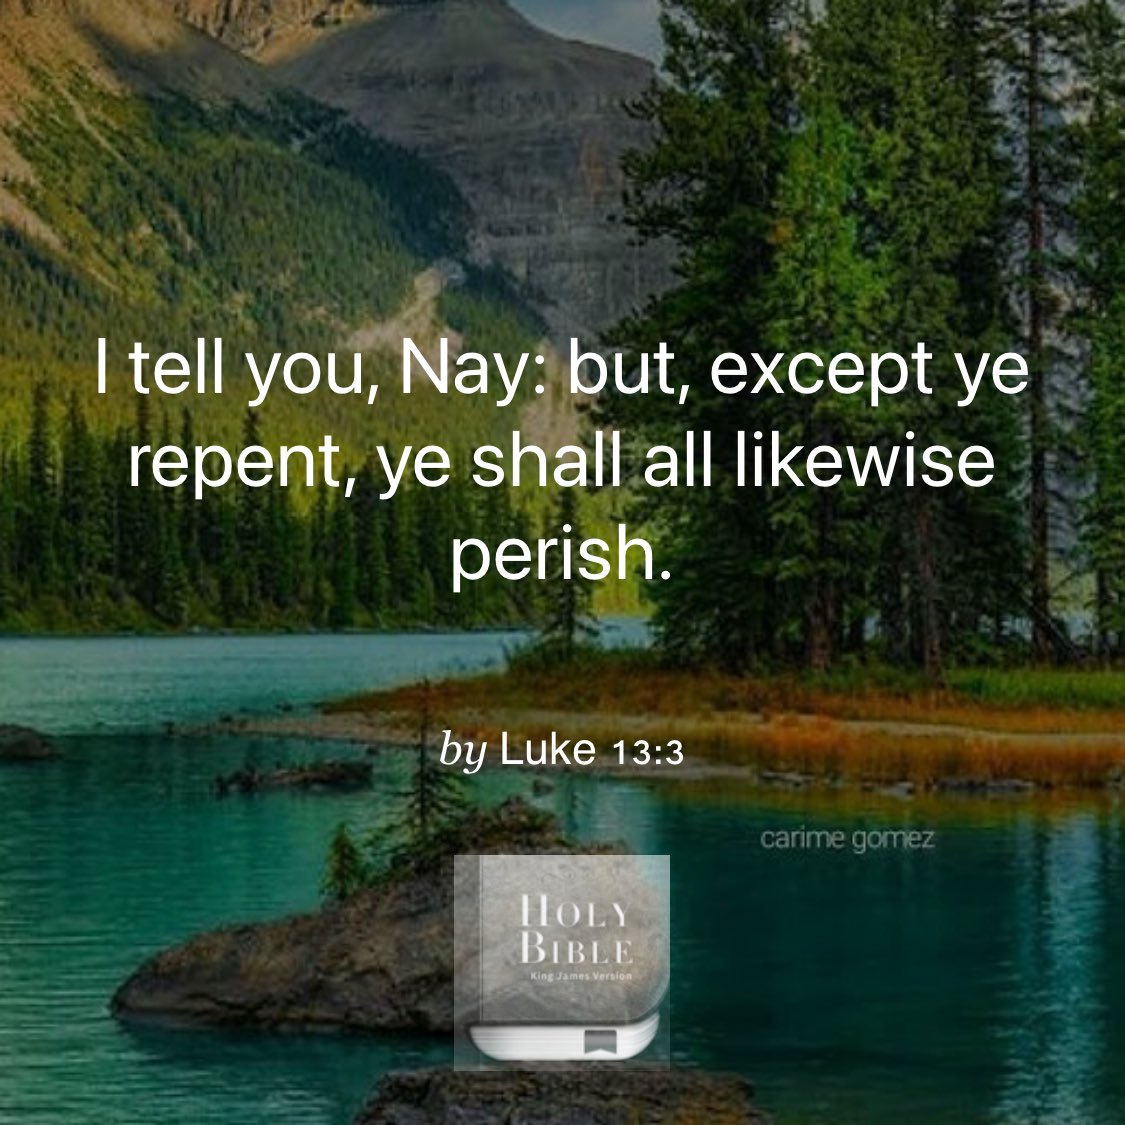 Short Bible verse for today #repentance #Jesussaves #Jesusloves #Godislove #Godgotyourback #bebornagain #Godismerciful